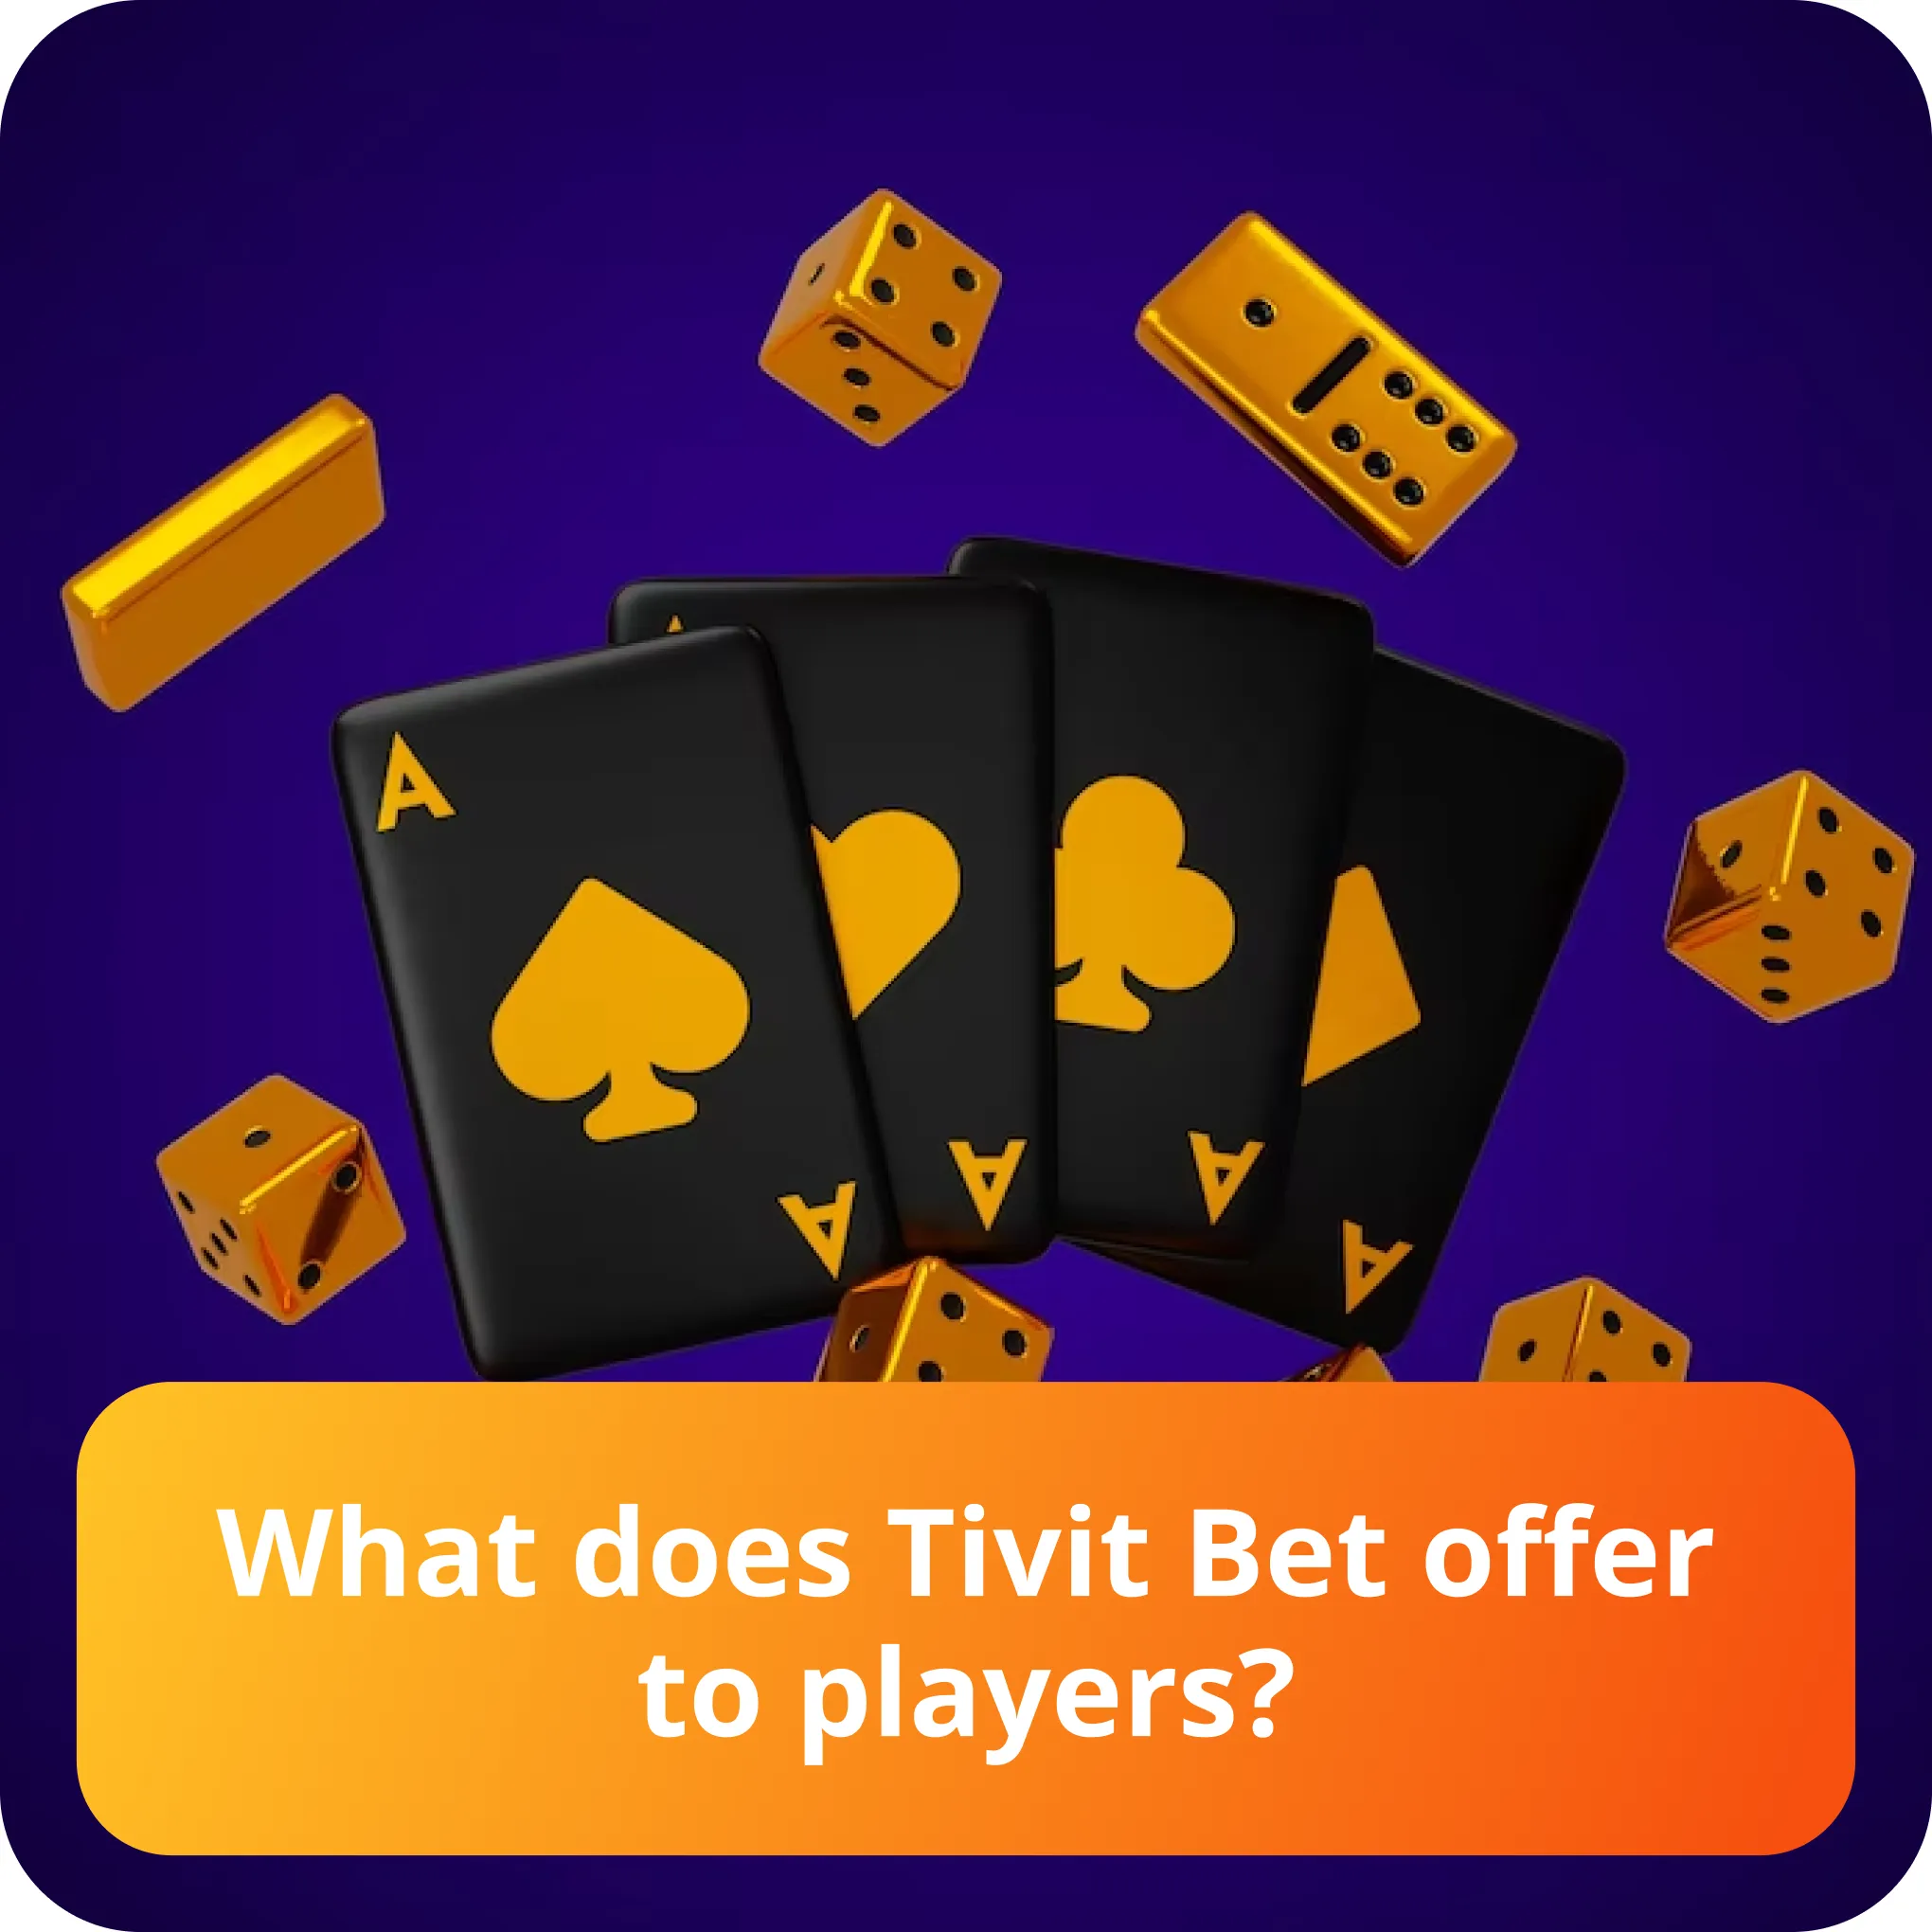 tivit bet offers